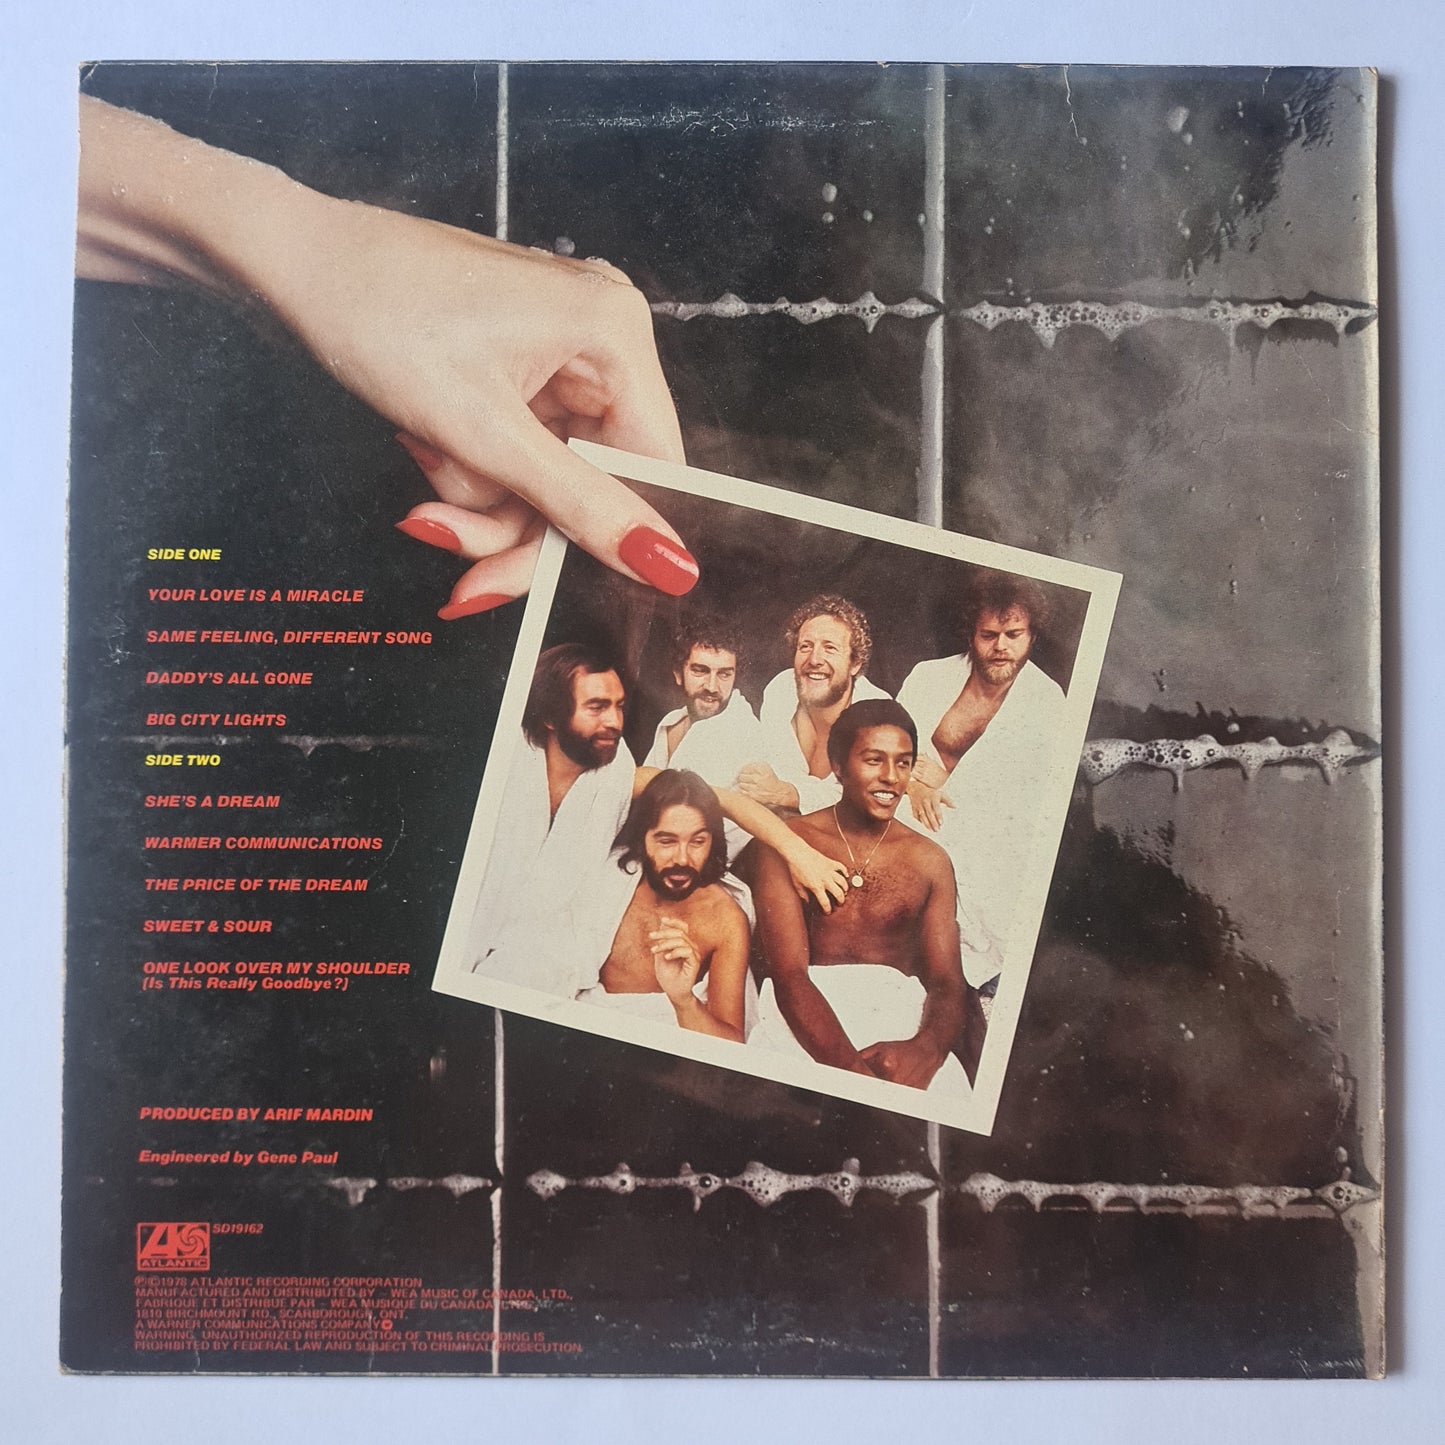 Average White Band – Warmer Communications - 1978 - Vinyl Record